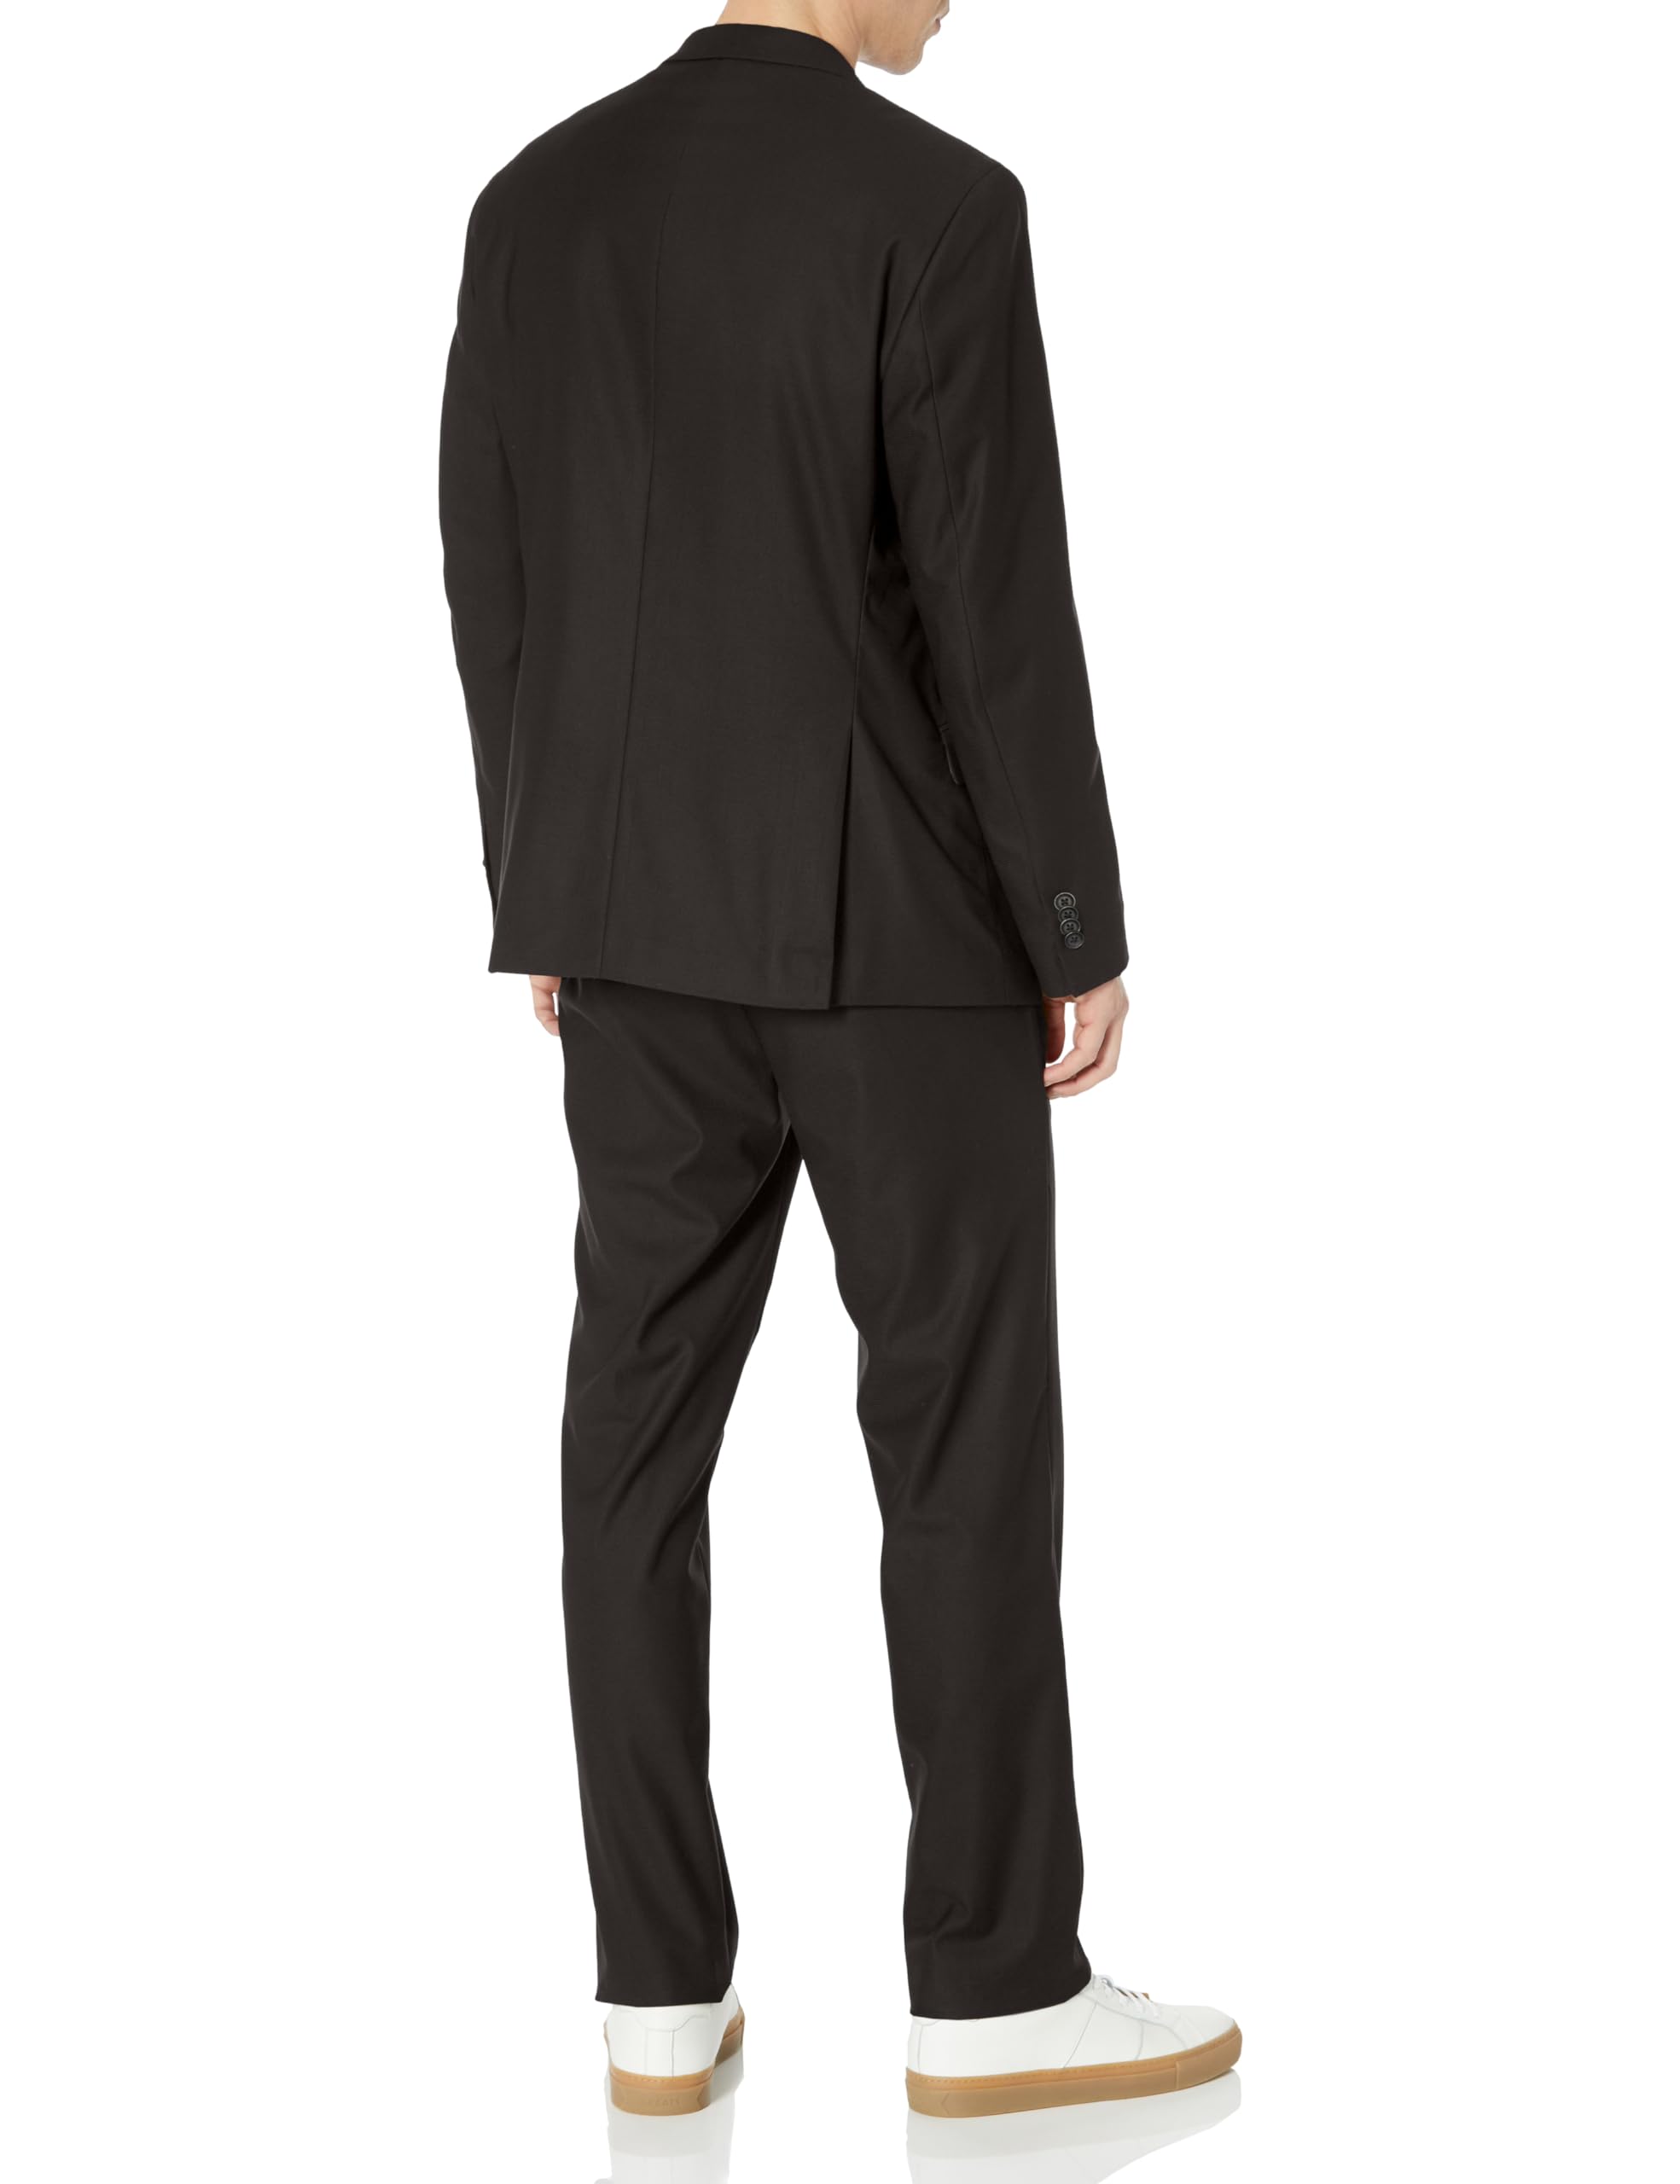 Kenneth Cole REACTION Men's Performance Fabric Slim Fit Suit